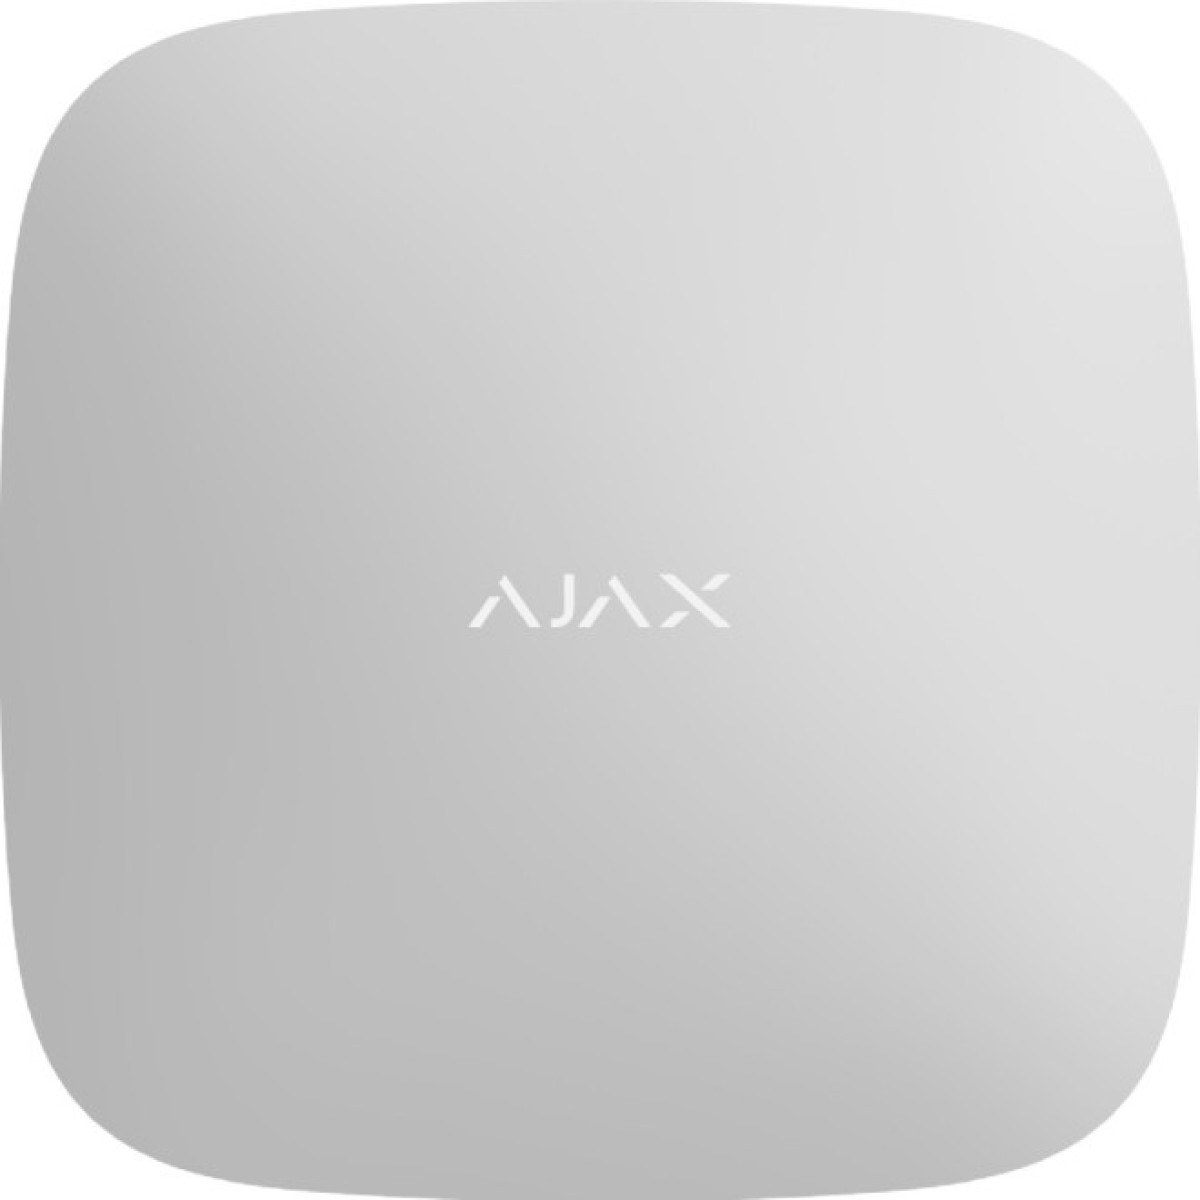 Ретранслятор Ajax ReX2 white 256_256.jpg